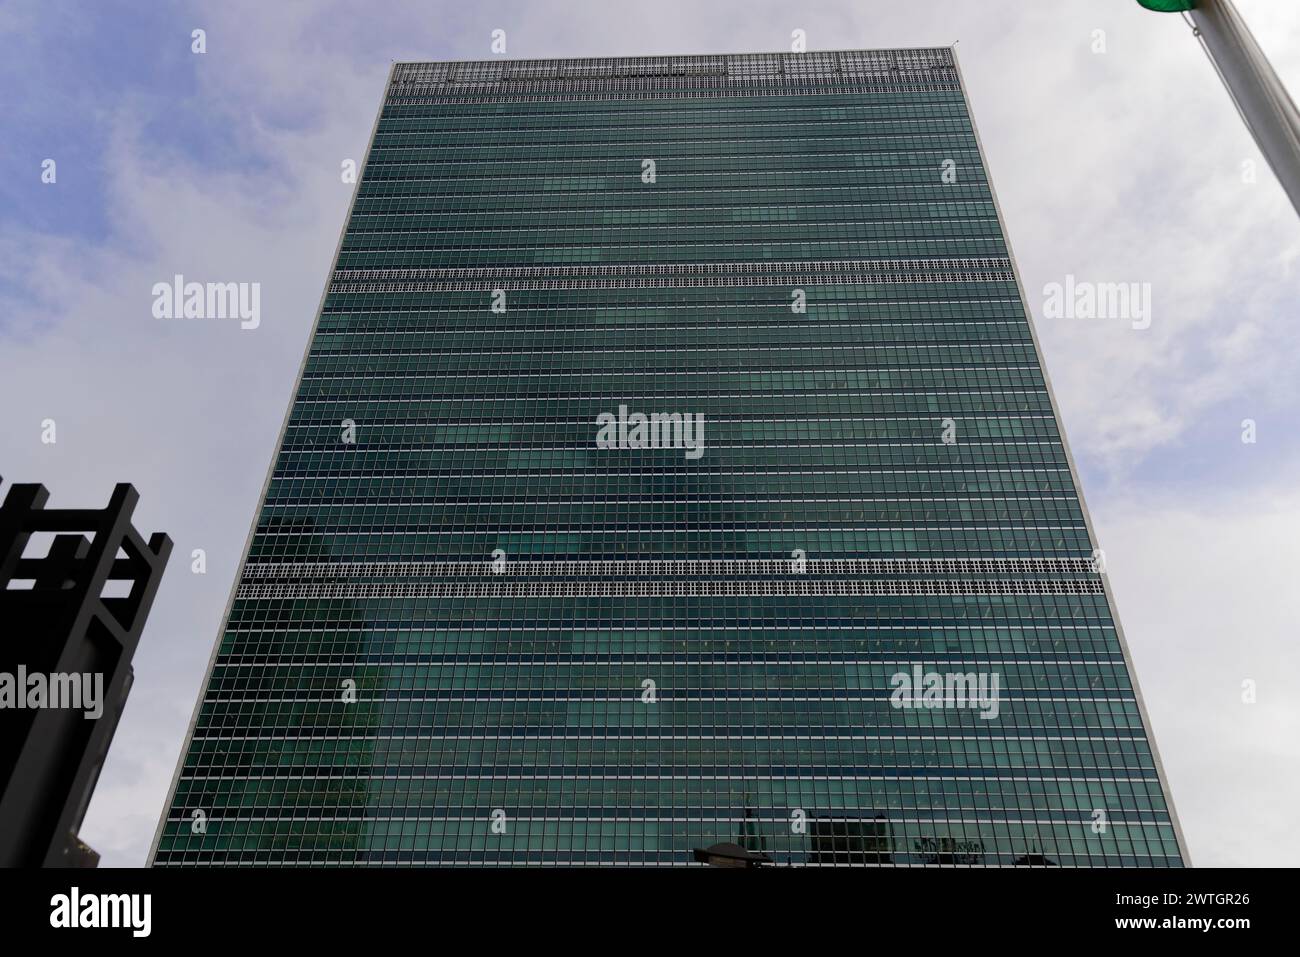 UN Headquarters, East River, A modern skyscraper with a glass facade rises into a cloudy sky, Manhattan, New York City, New York, USA, North America Stock Photo